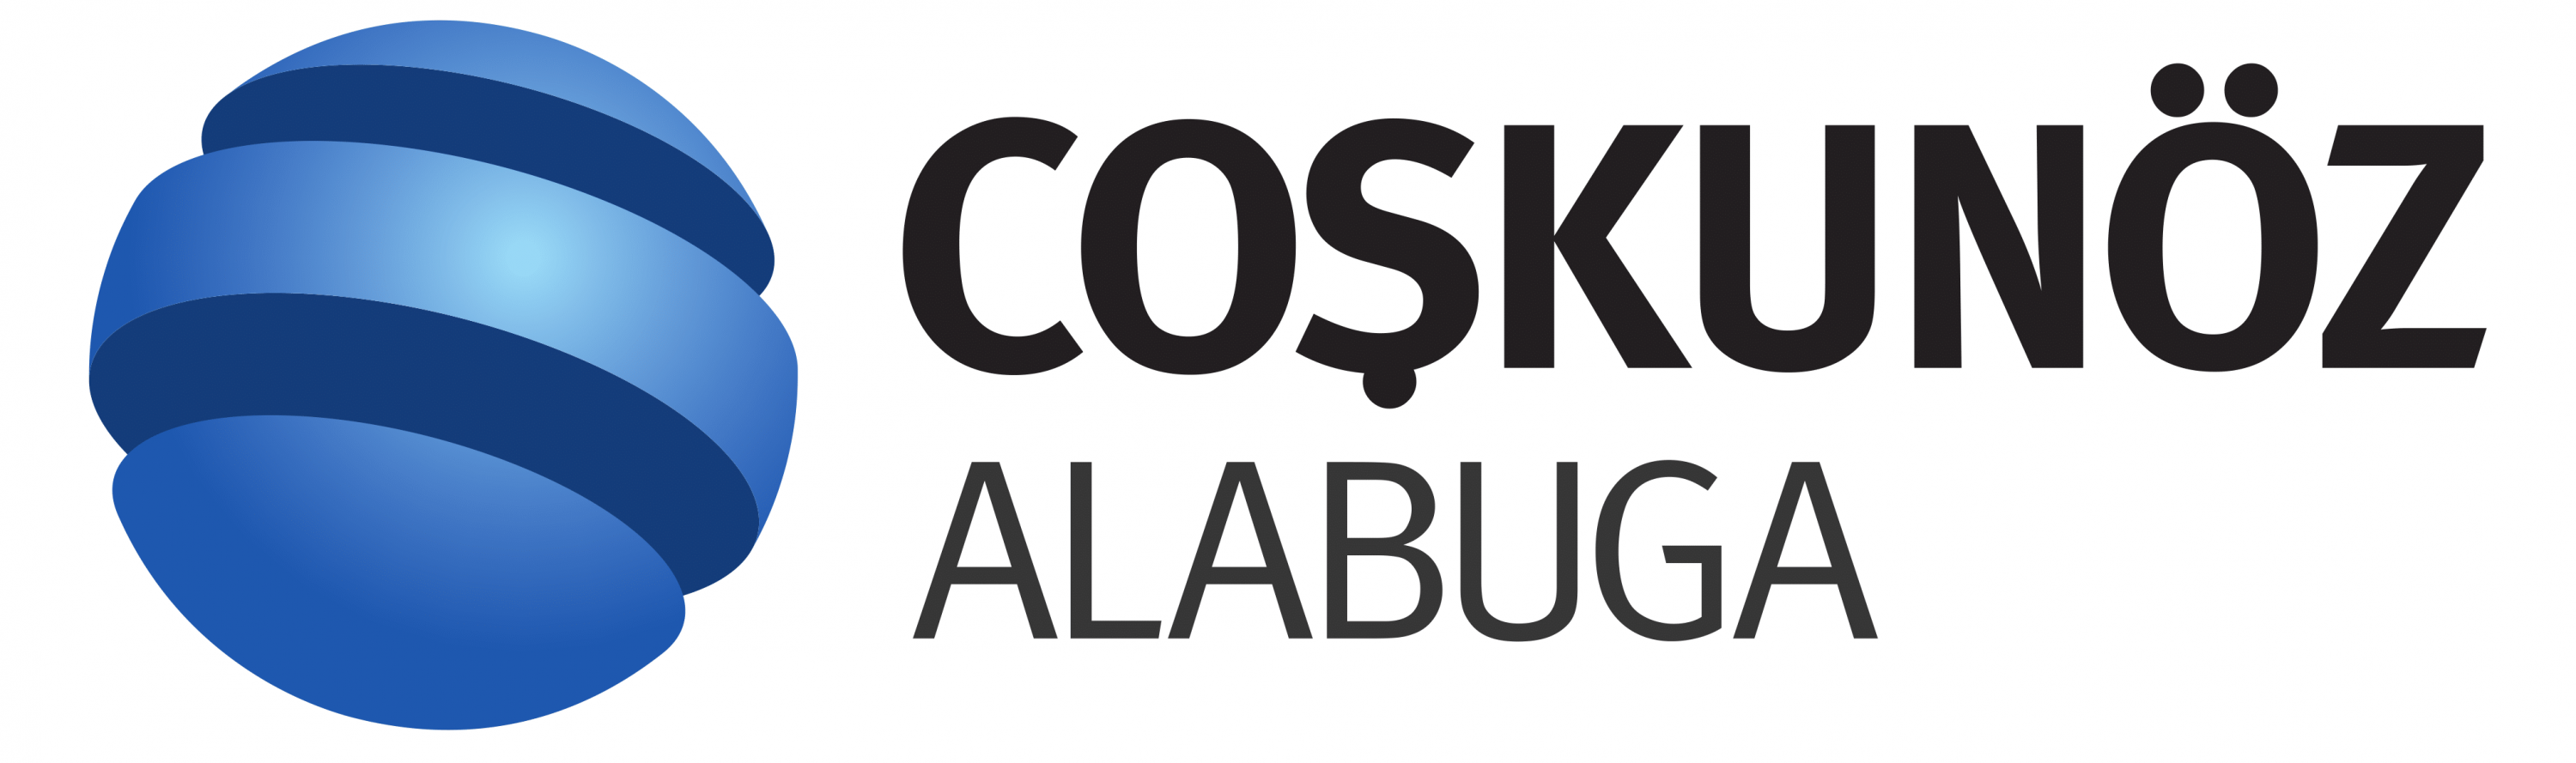 alabuga-logo